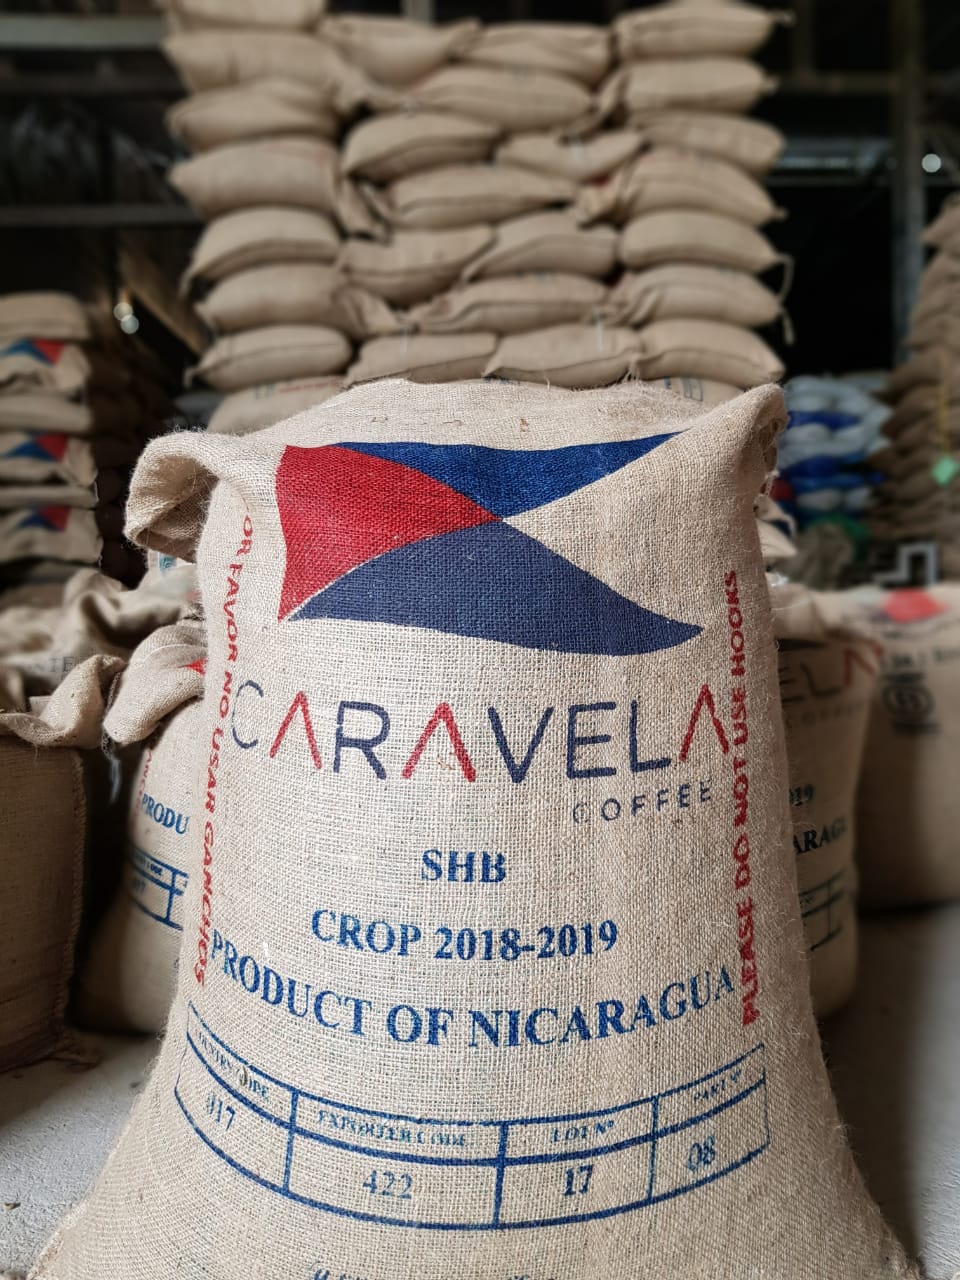 Caravela_Coffee